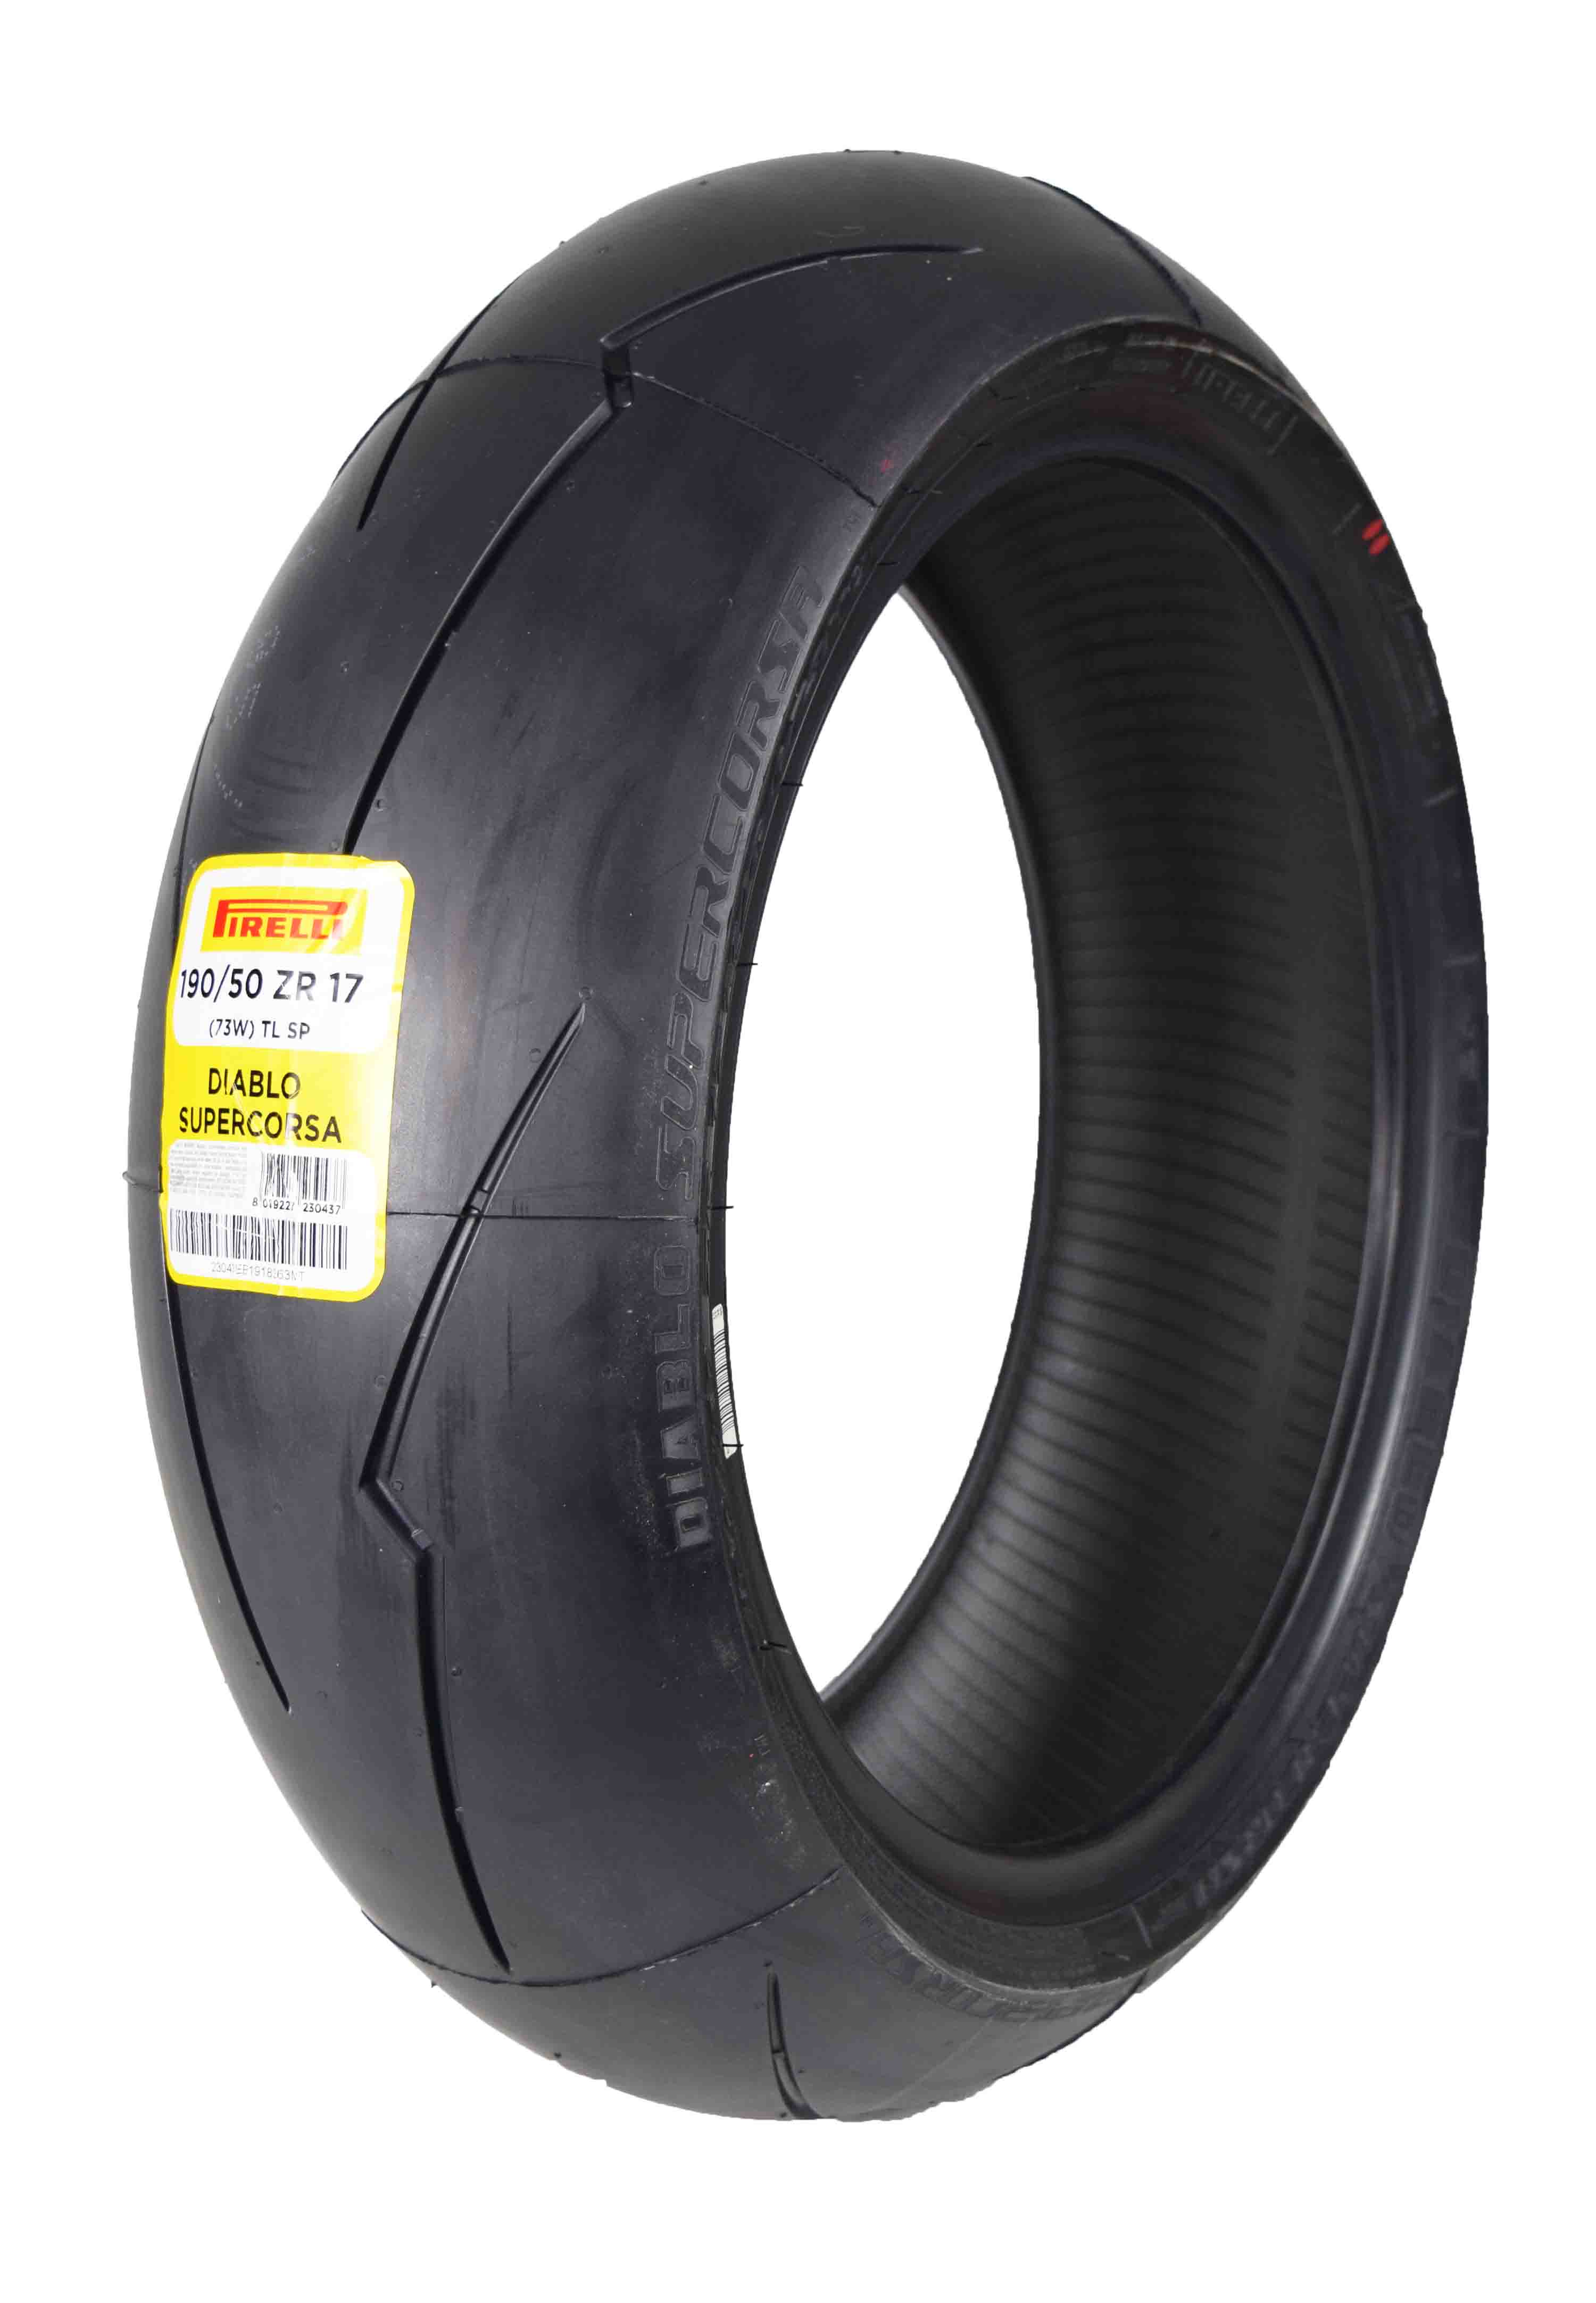 Pirelli-Tire-190-50ZR17-SUPER-CORSA-V2-Radial-Motorcycle-Rear-Tire-190-50-17-image-1